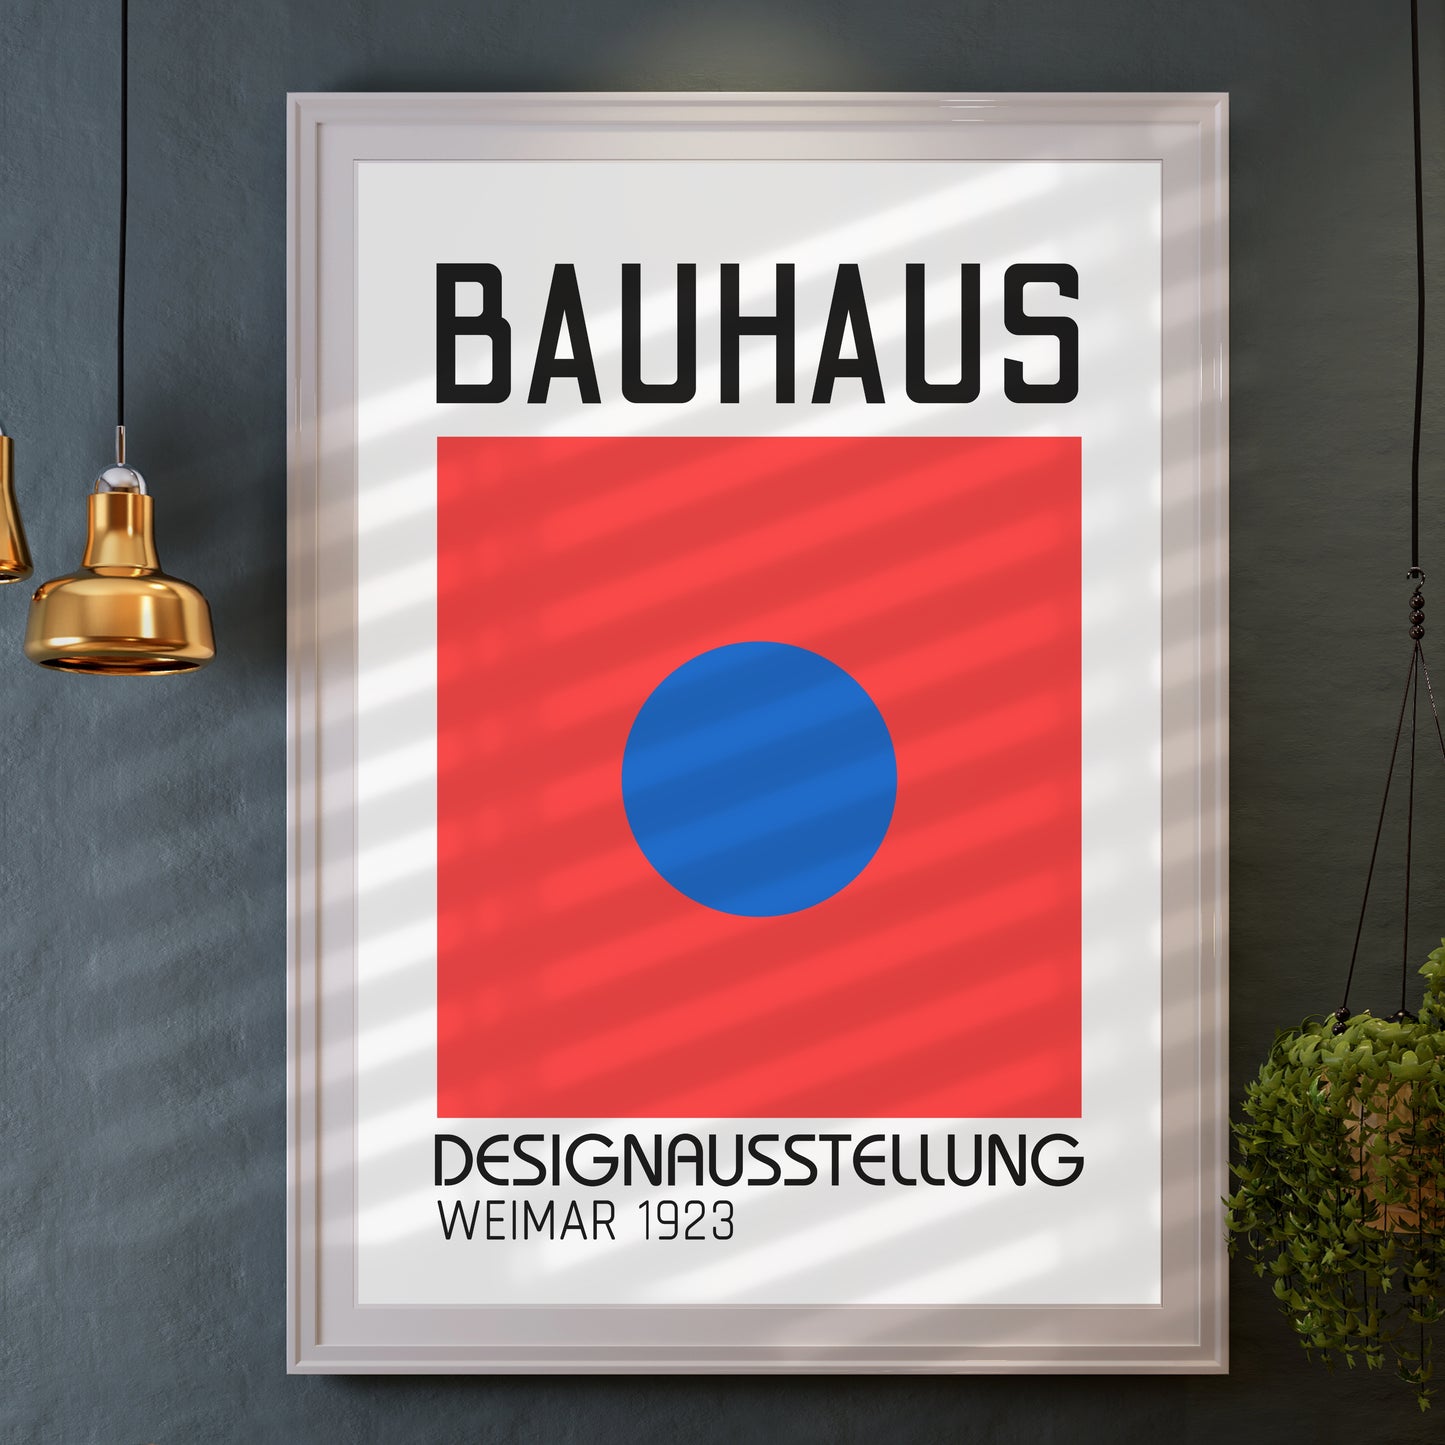 Bauhaus Exhibition, Blue Dot, Art Print, A3/A4/A5 Sizes